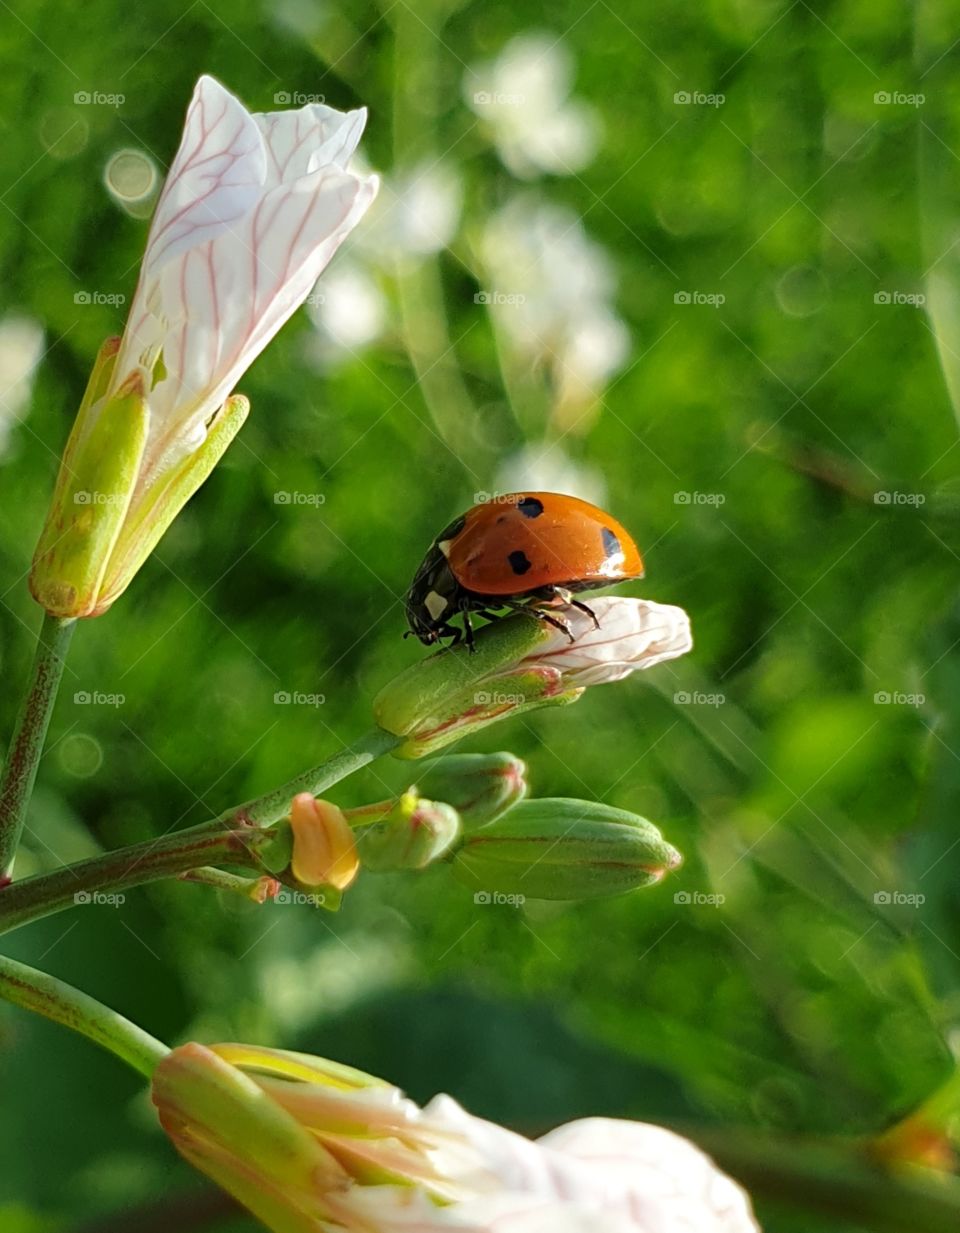 A ladybug on a flower. Closeup.